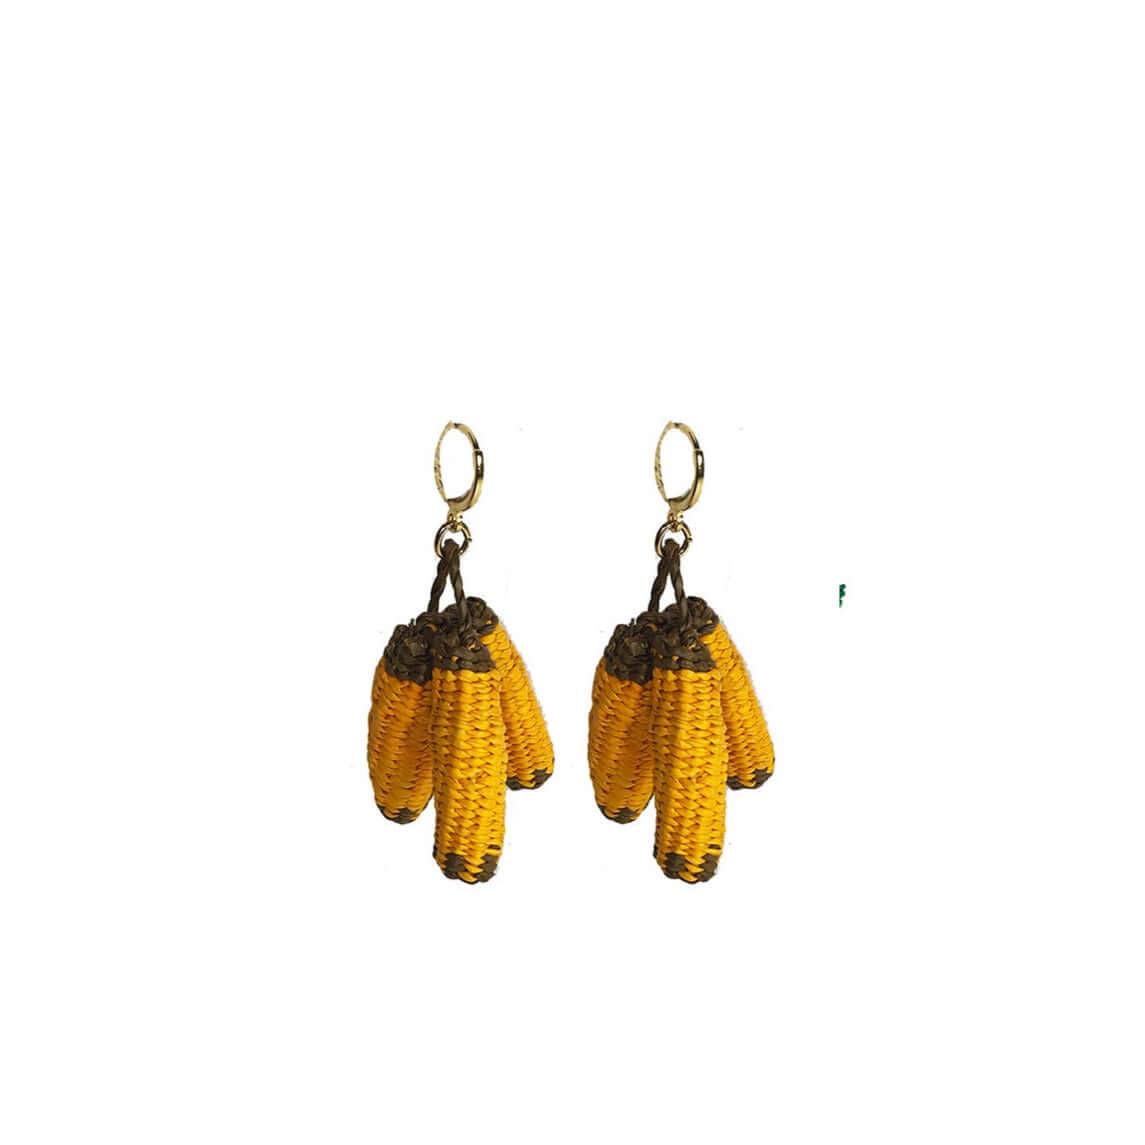 Banana Wicker Earrings - Serpui - Ileana Makri Store